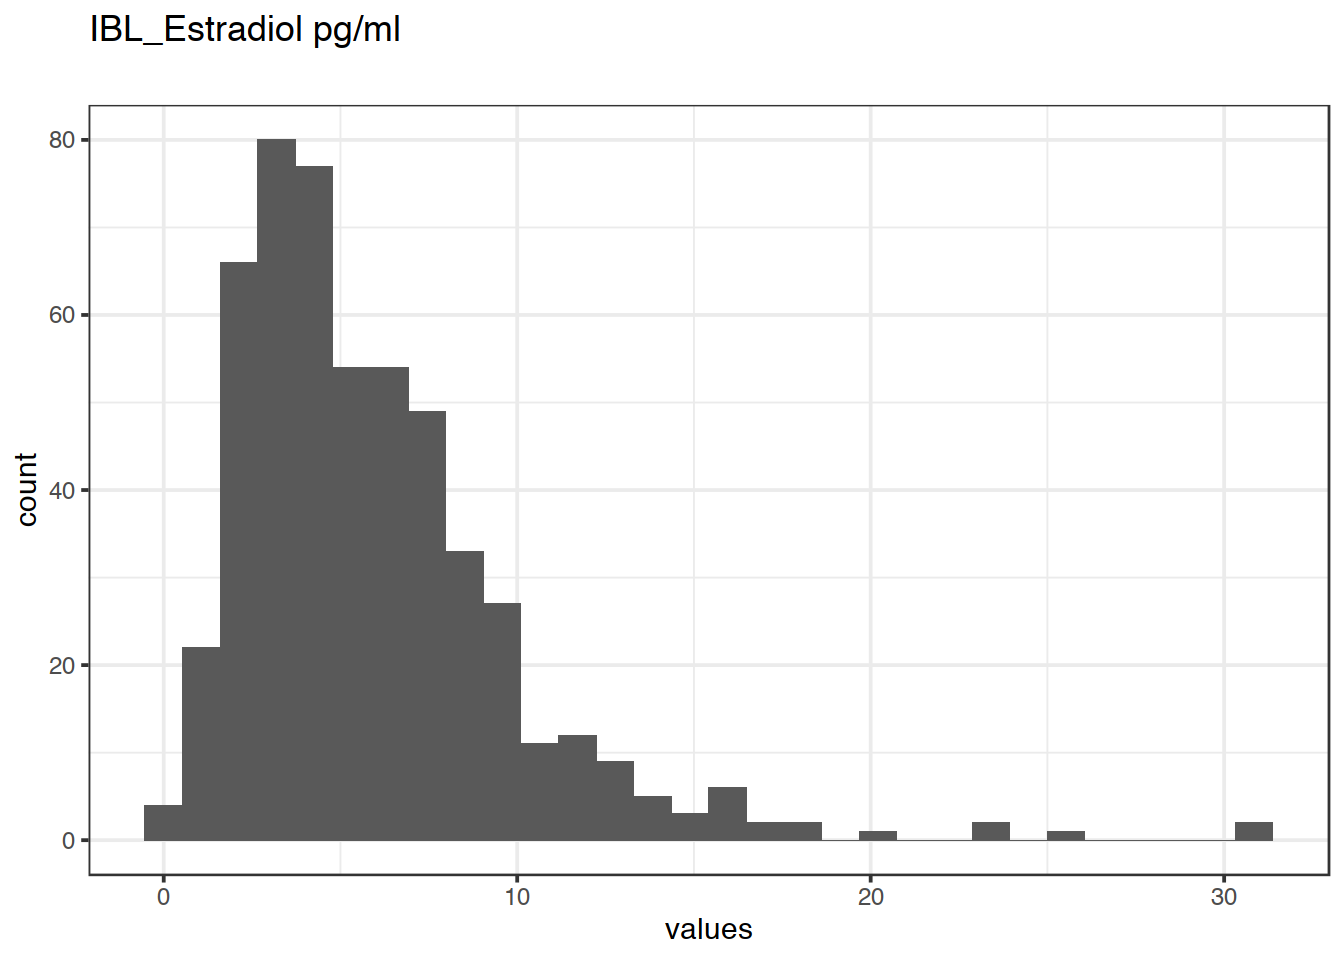 Distribution of values for IBL_Estradiol pg/ml